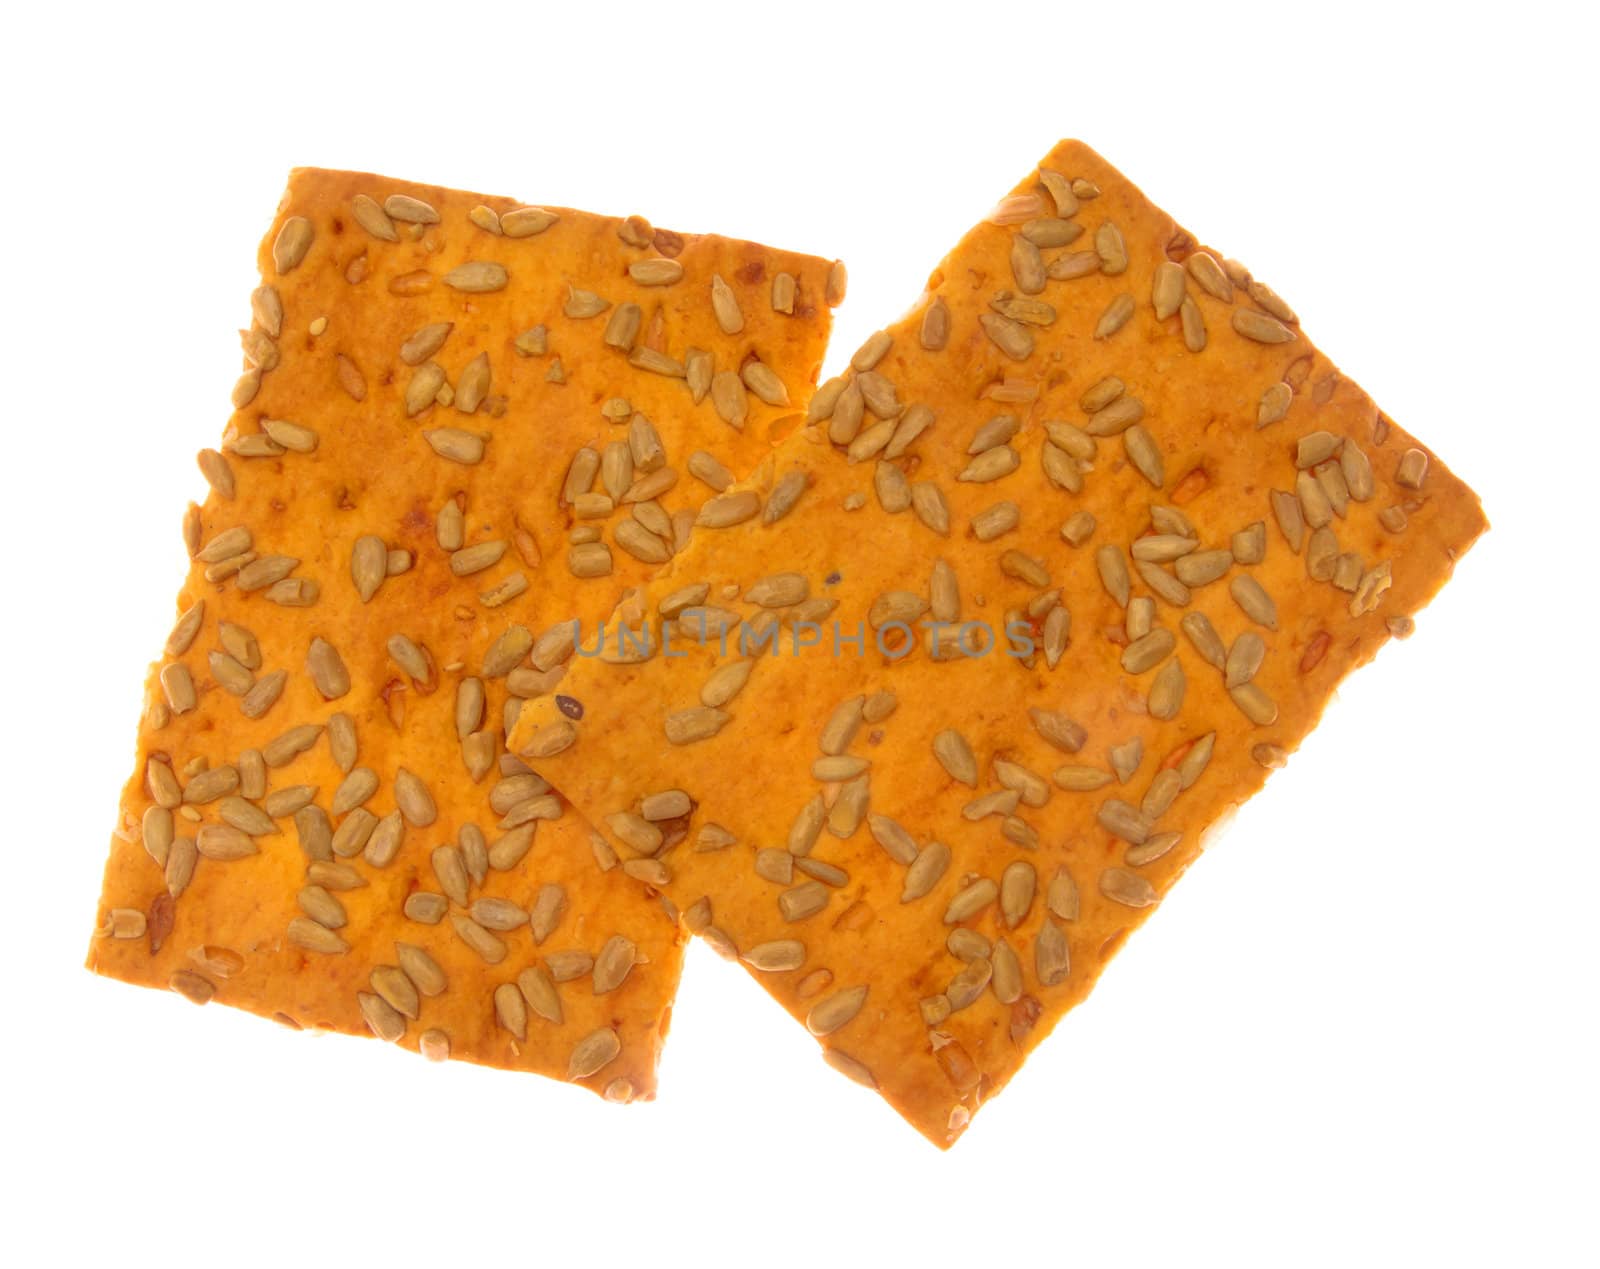 Crackers by tonlammerts